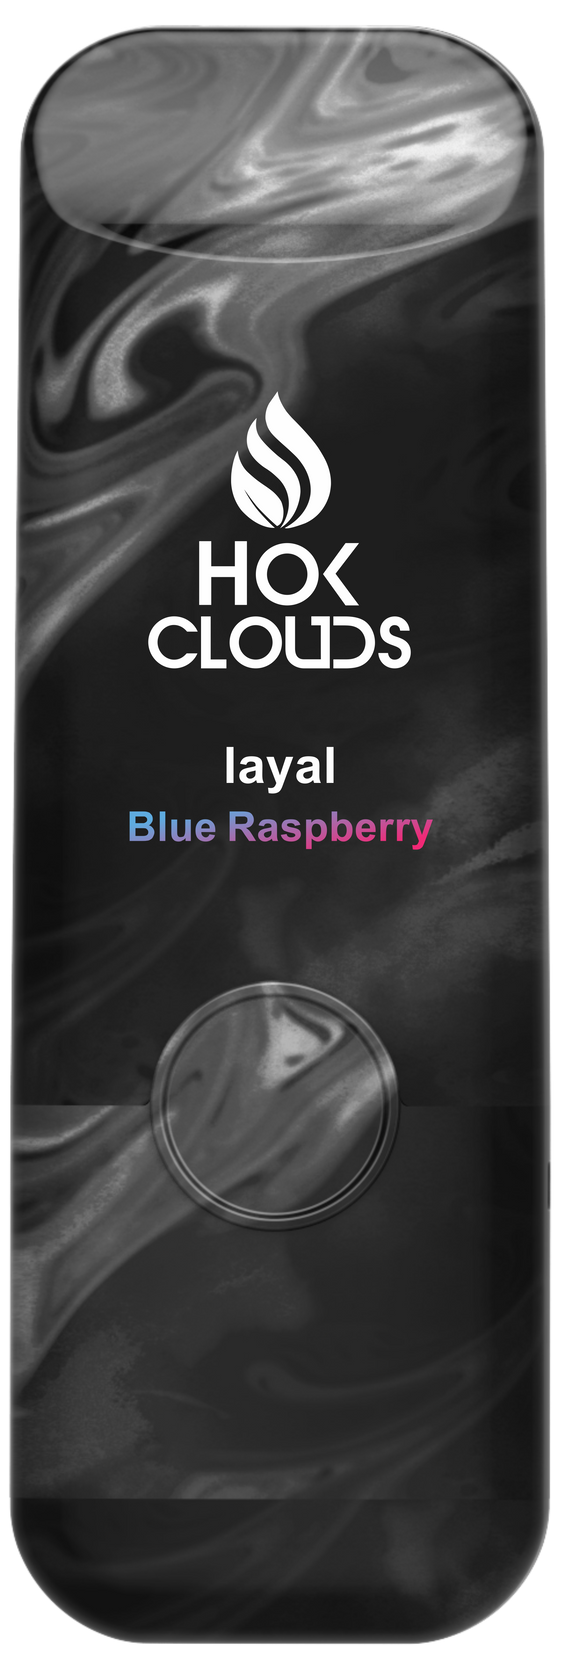 HOK Cloud Layal Kit Refills 3mg 9900 Puffs